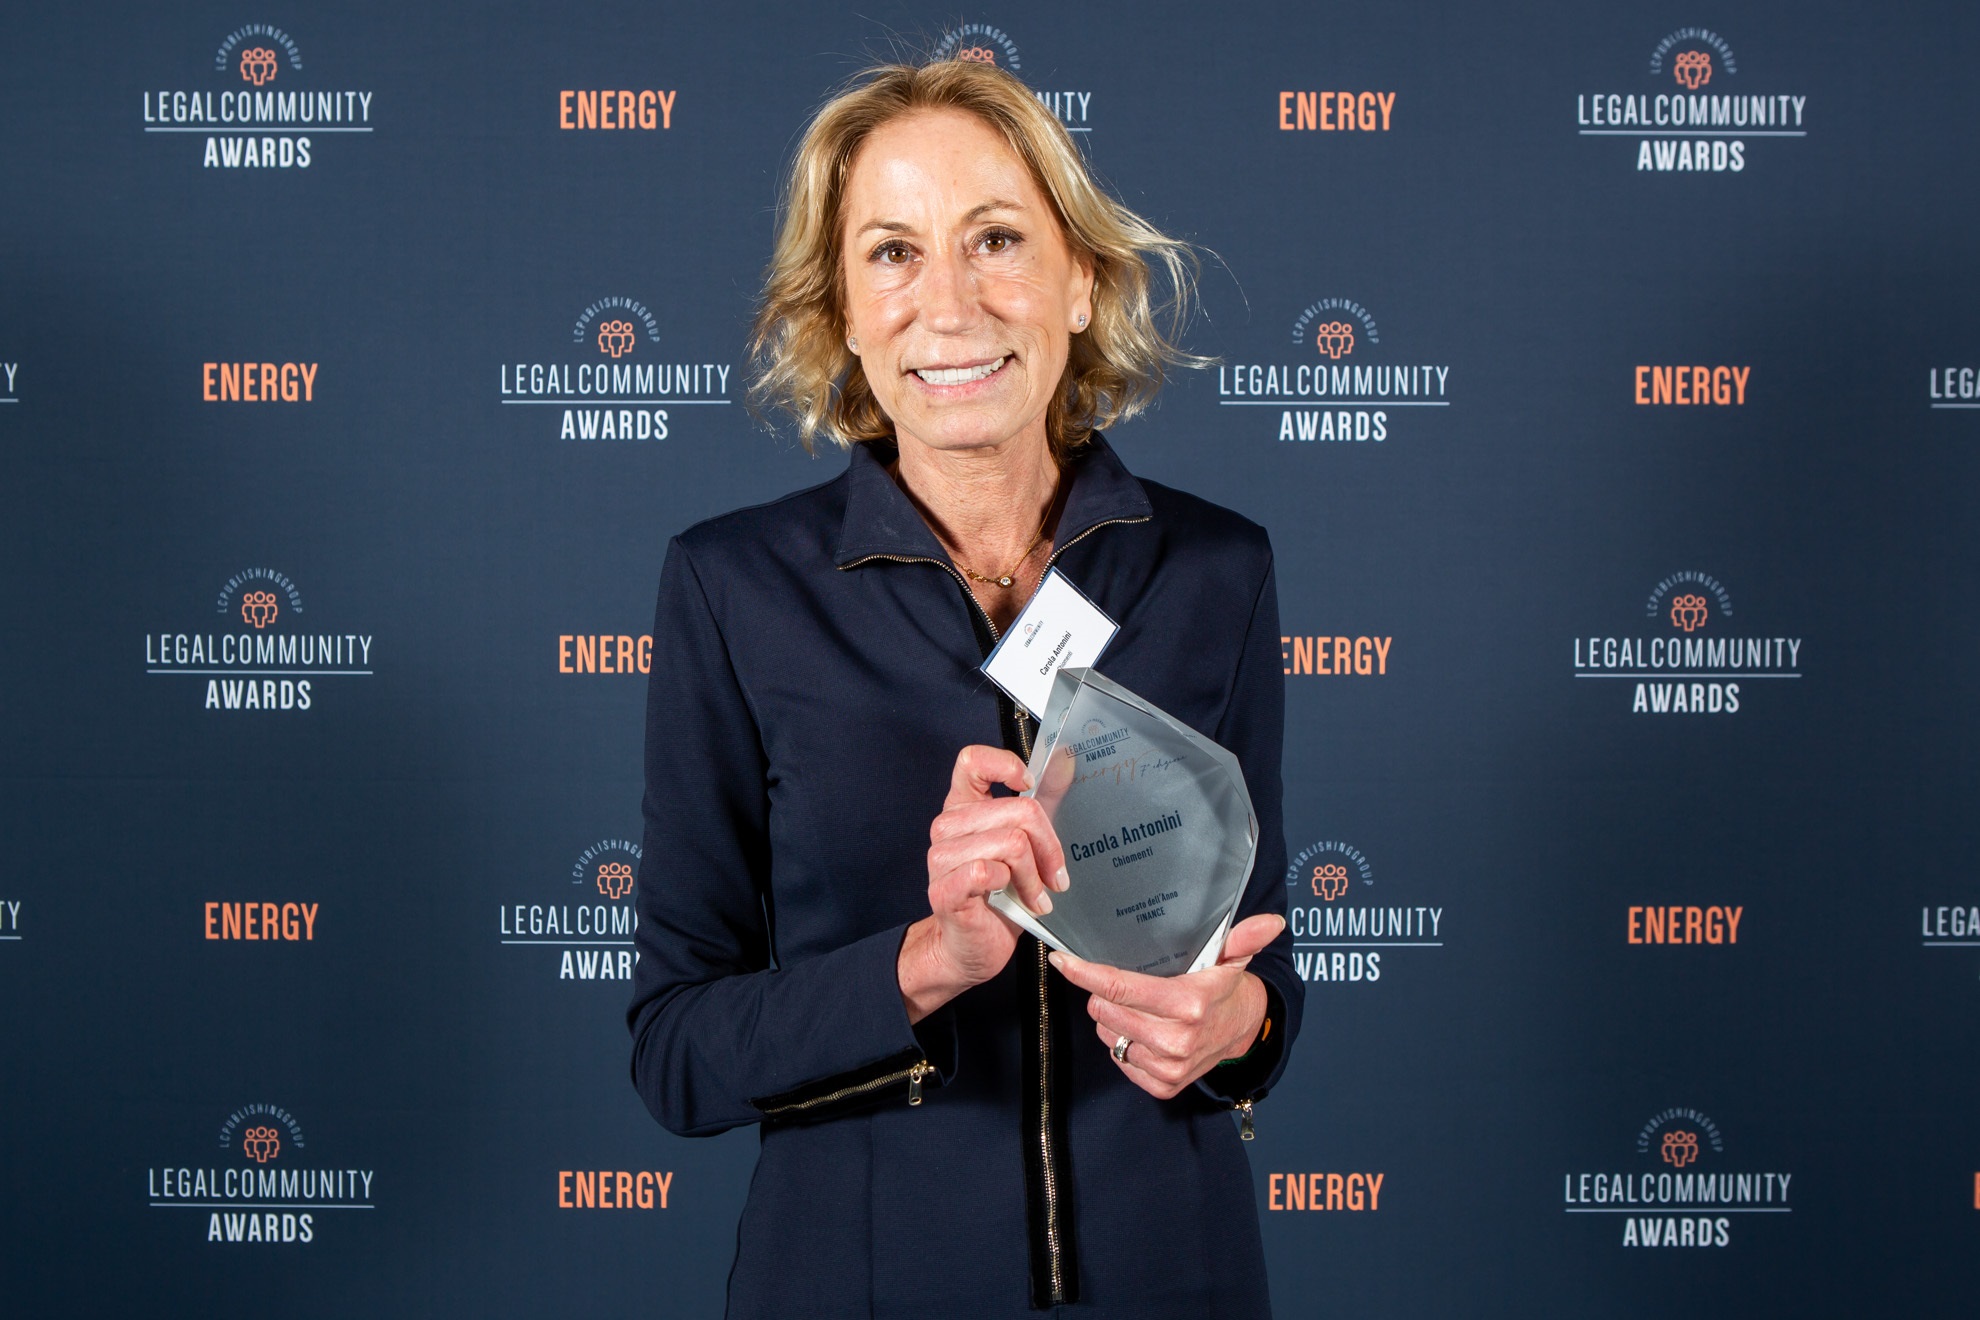 Legalcommunity Energy Awards 2020 : Carola Antonini “Avvocato dell’anno finanza”